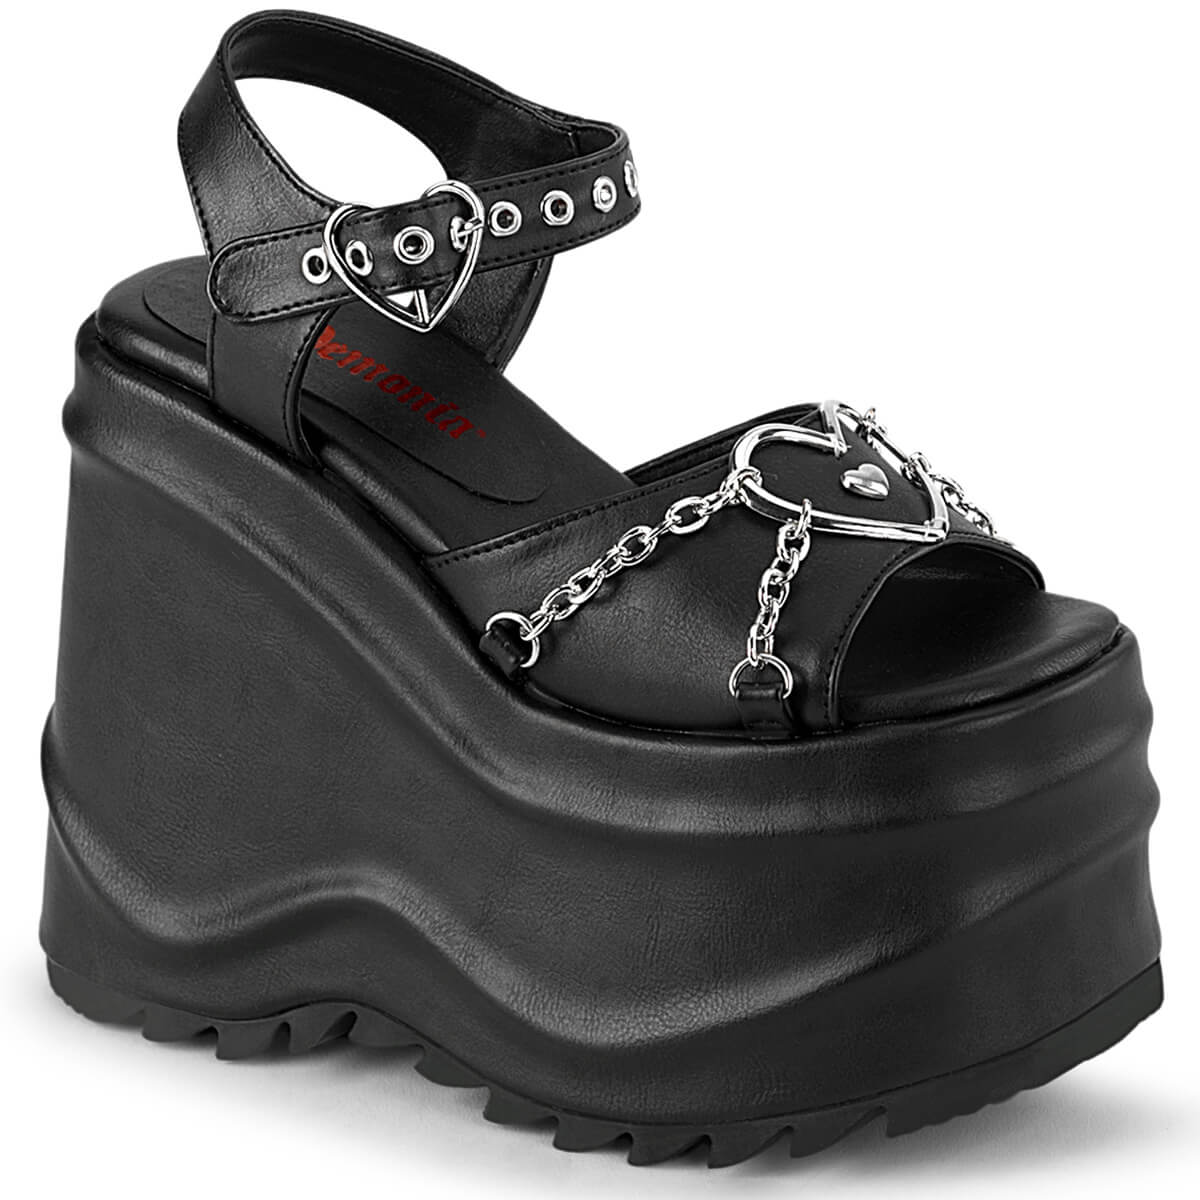 Chain My Heart Platform Sandals Black PU